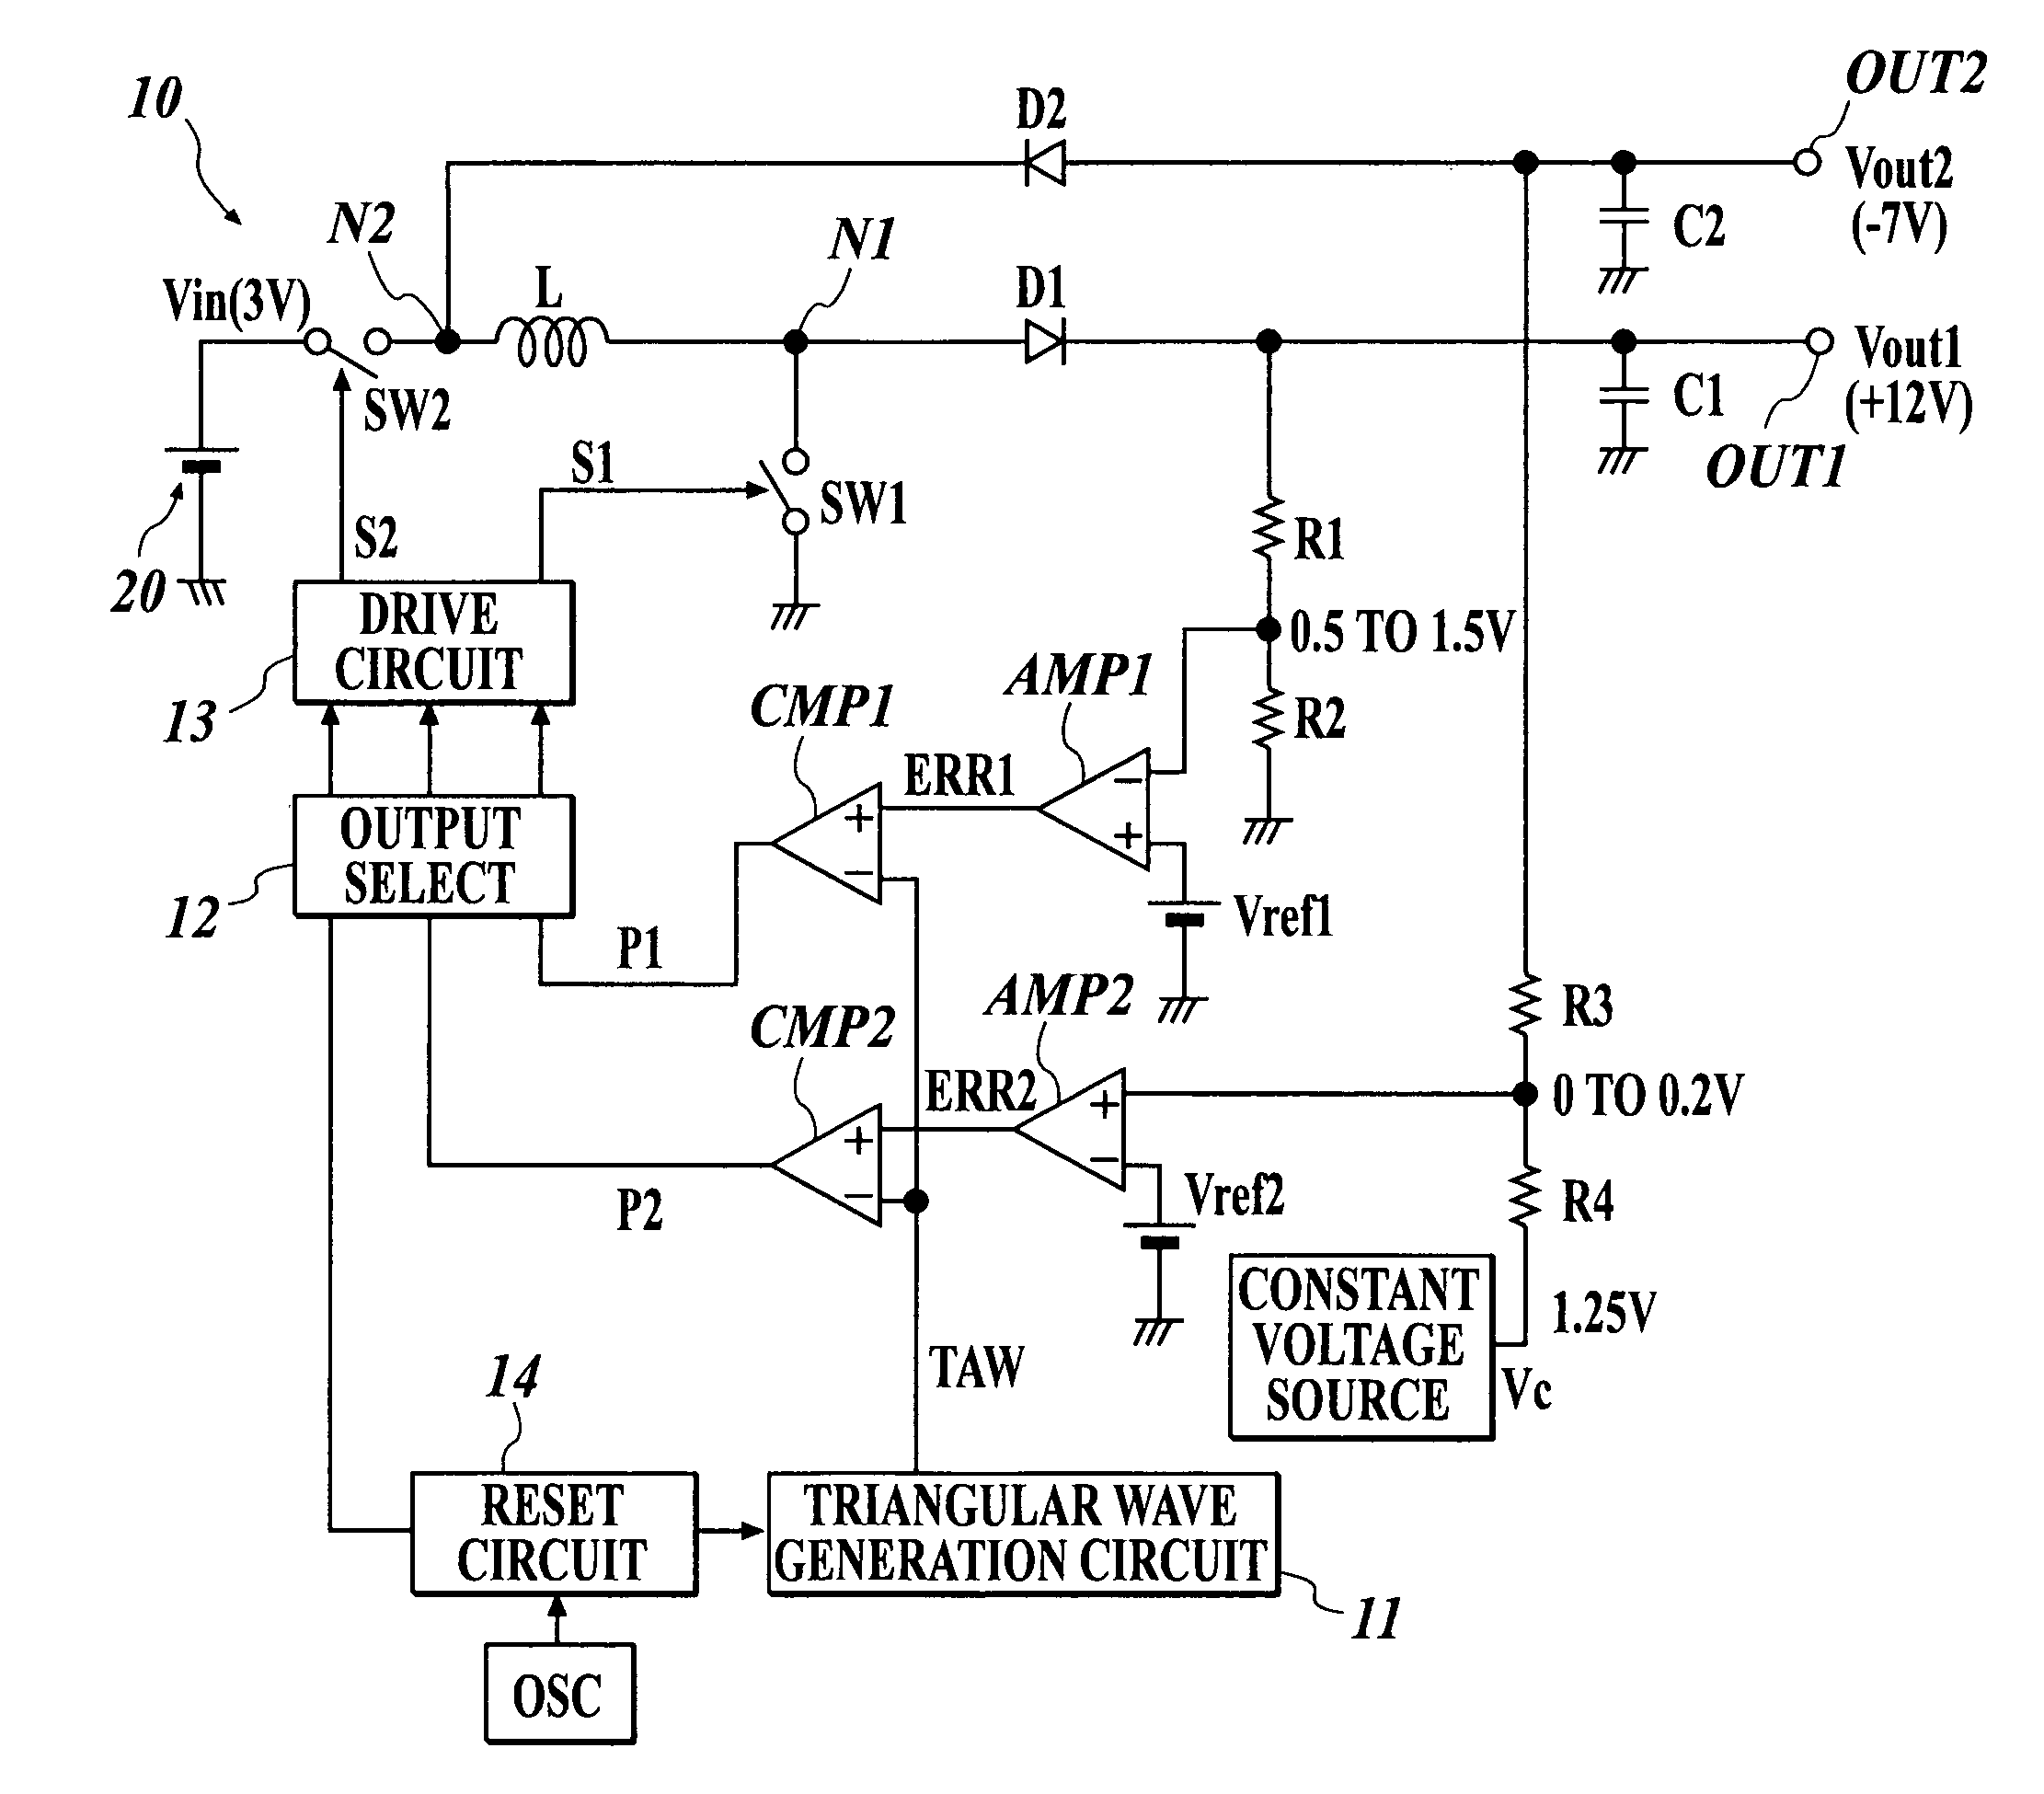 Multi-output type DC/DC converter